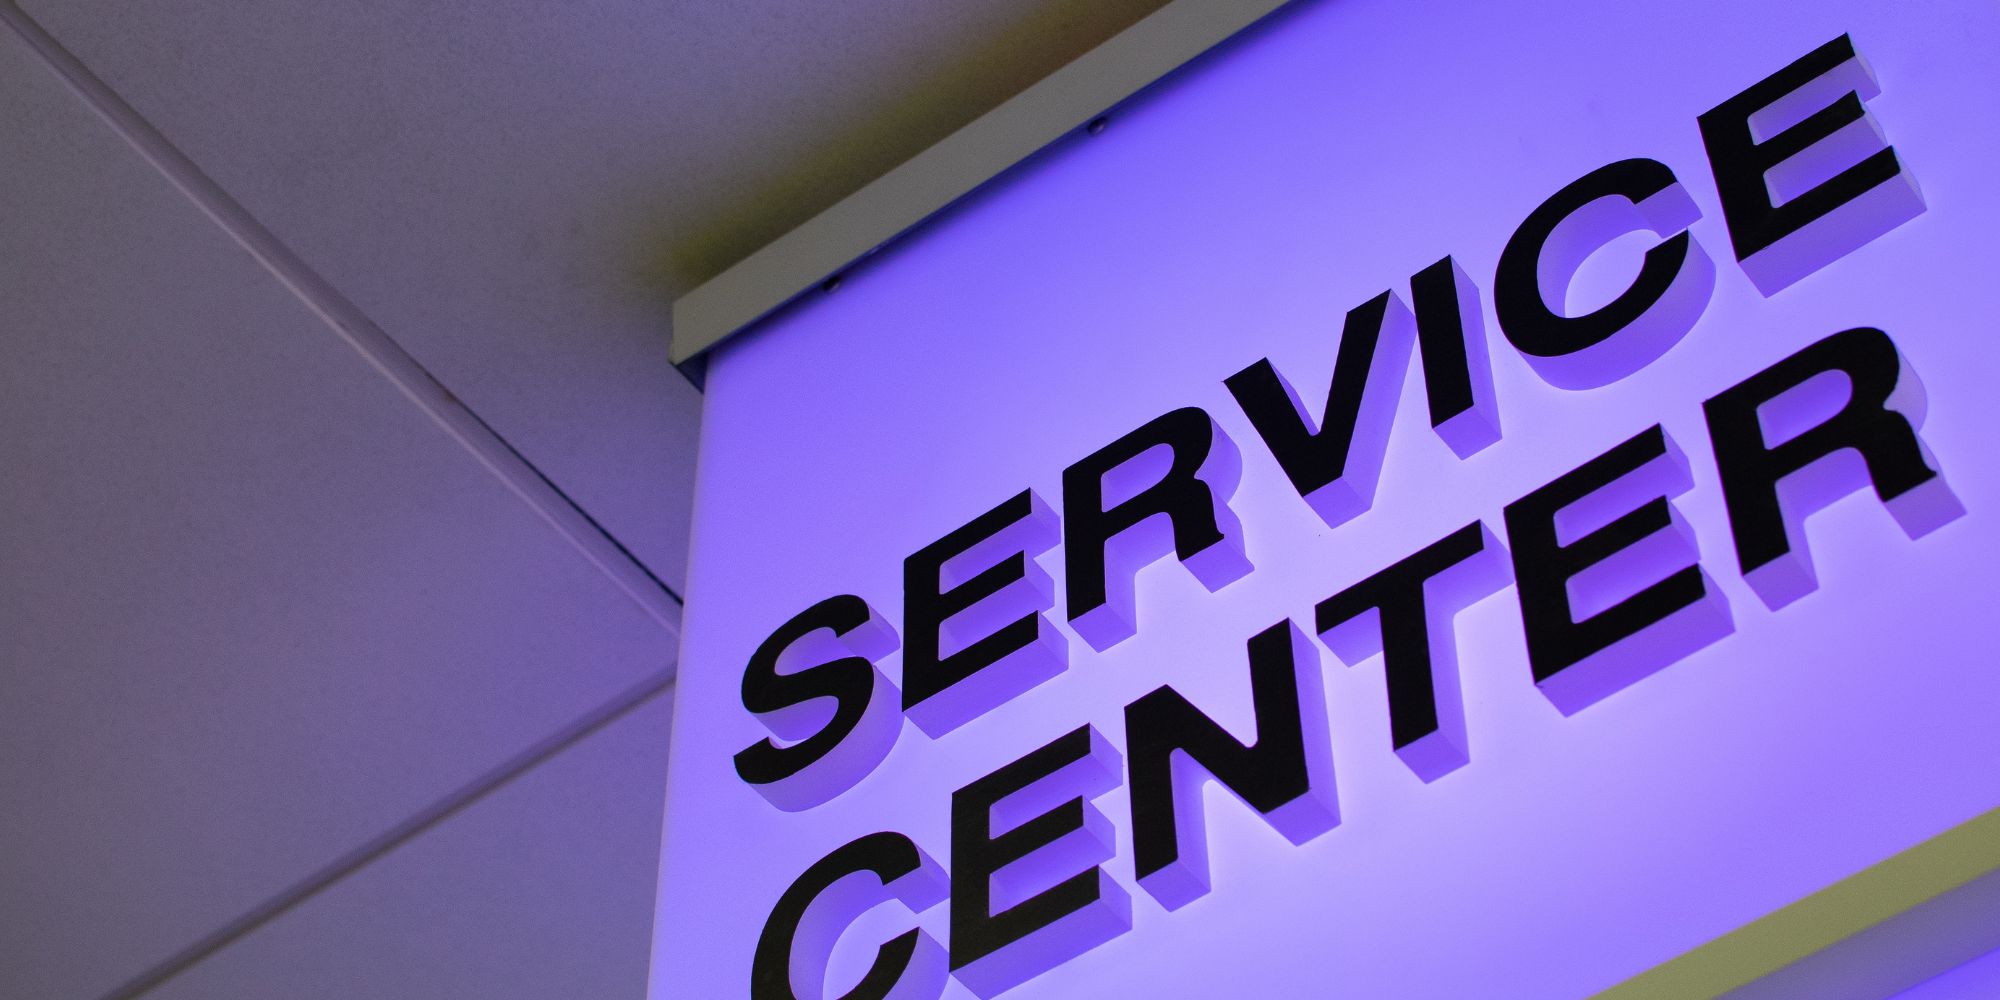 service center